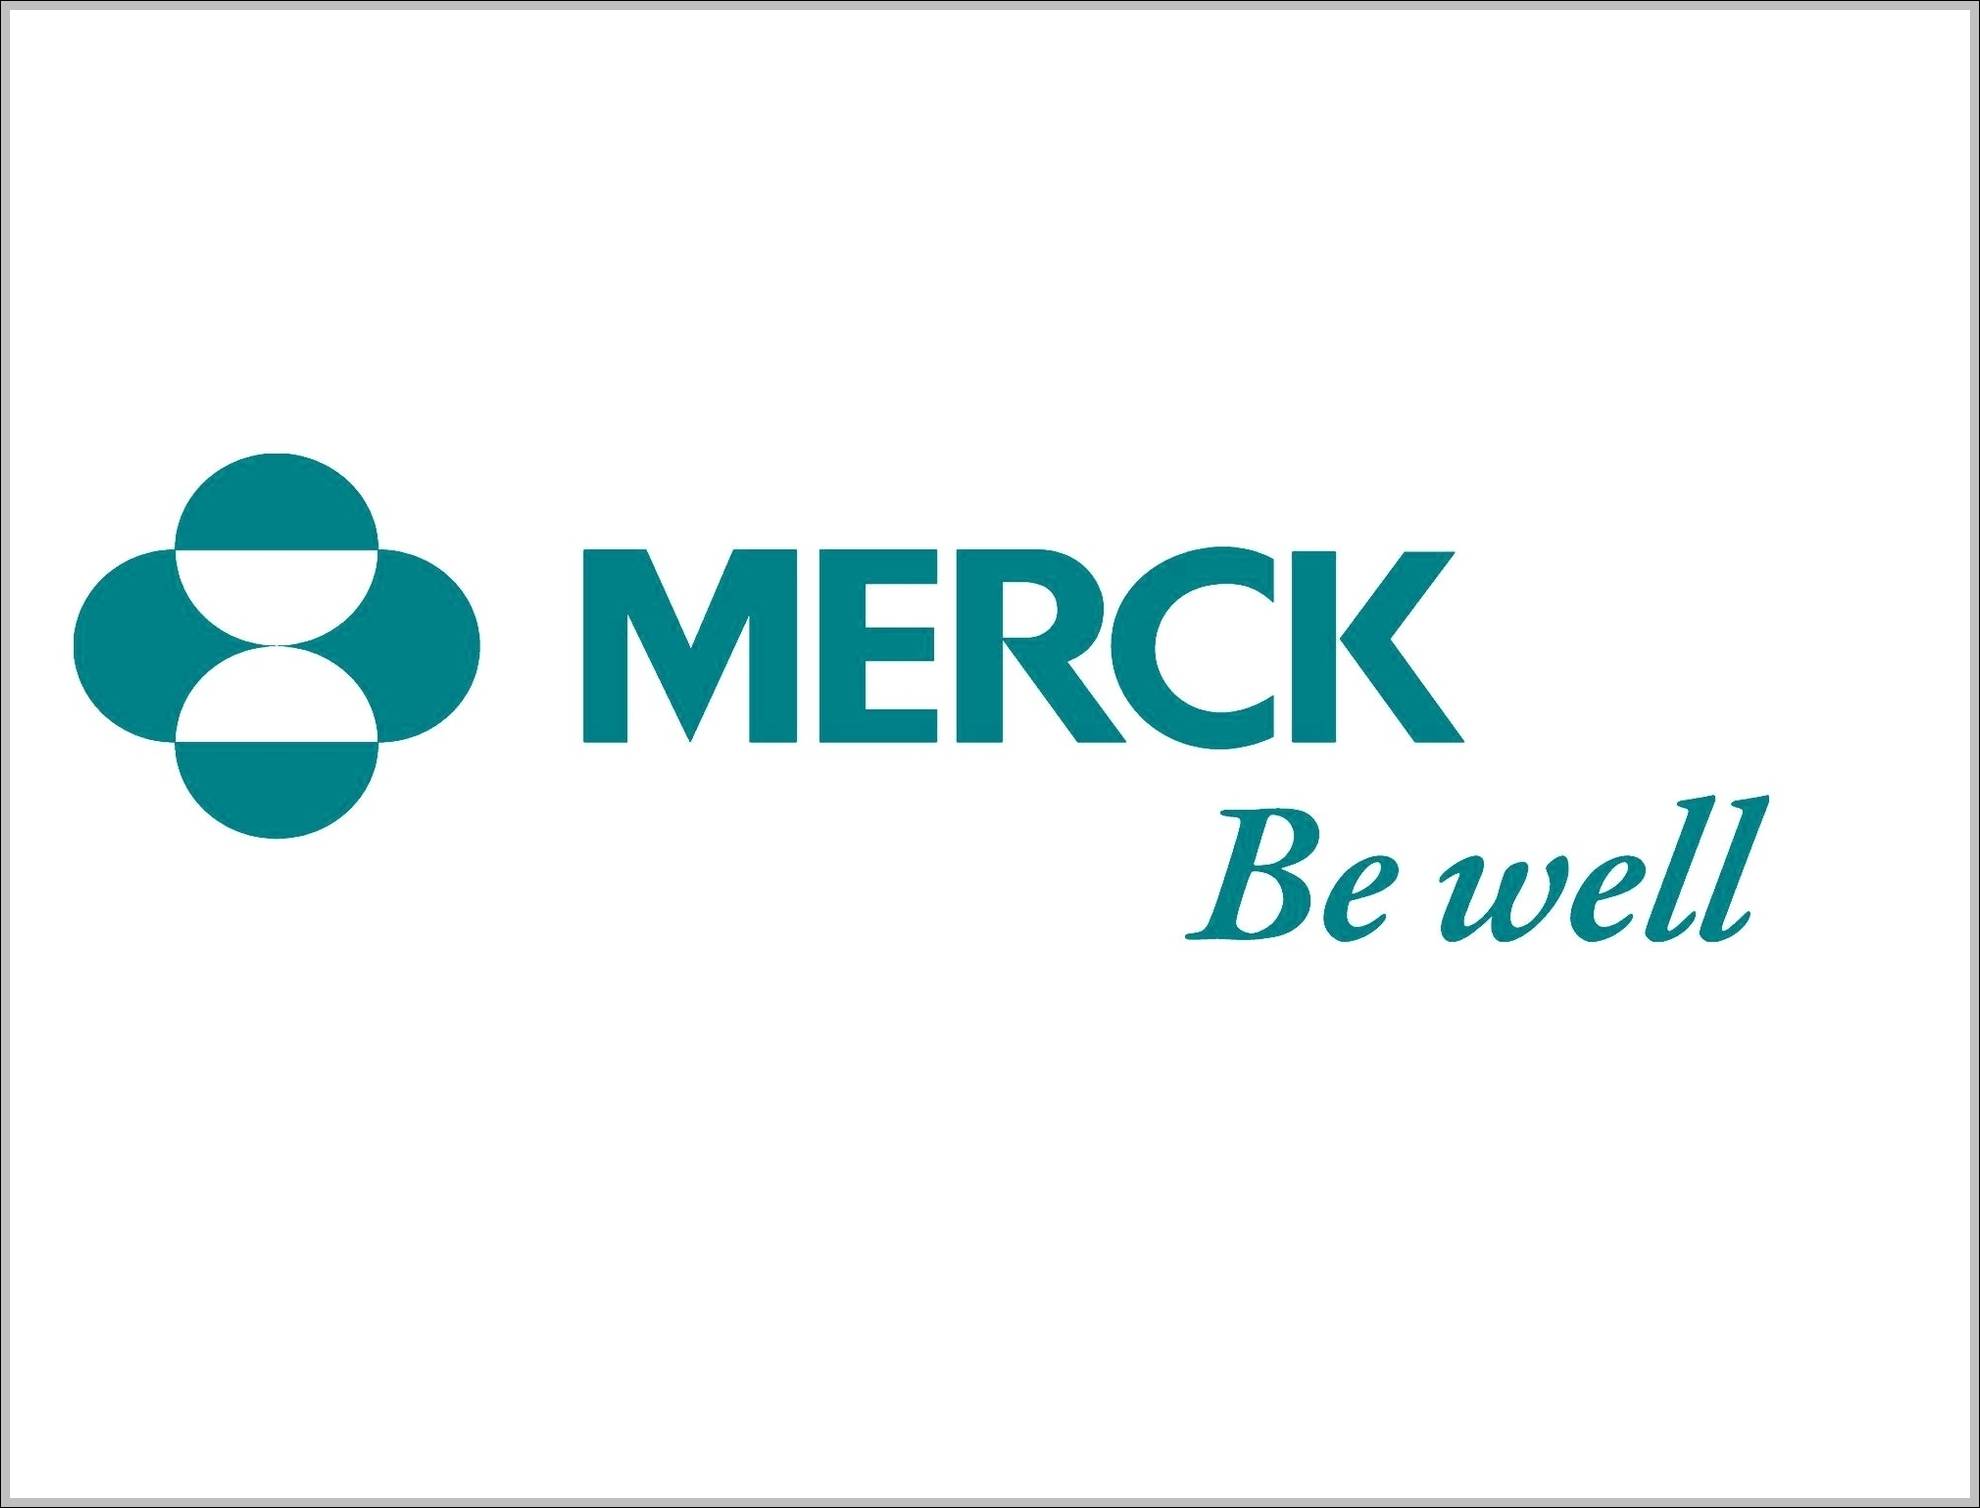 Merck logo slogan